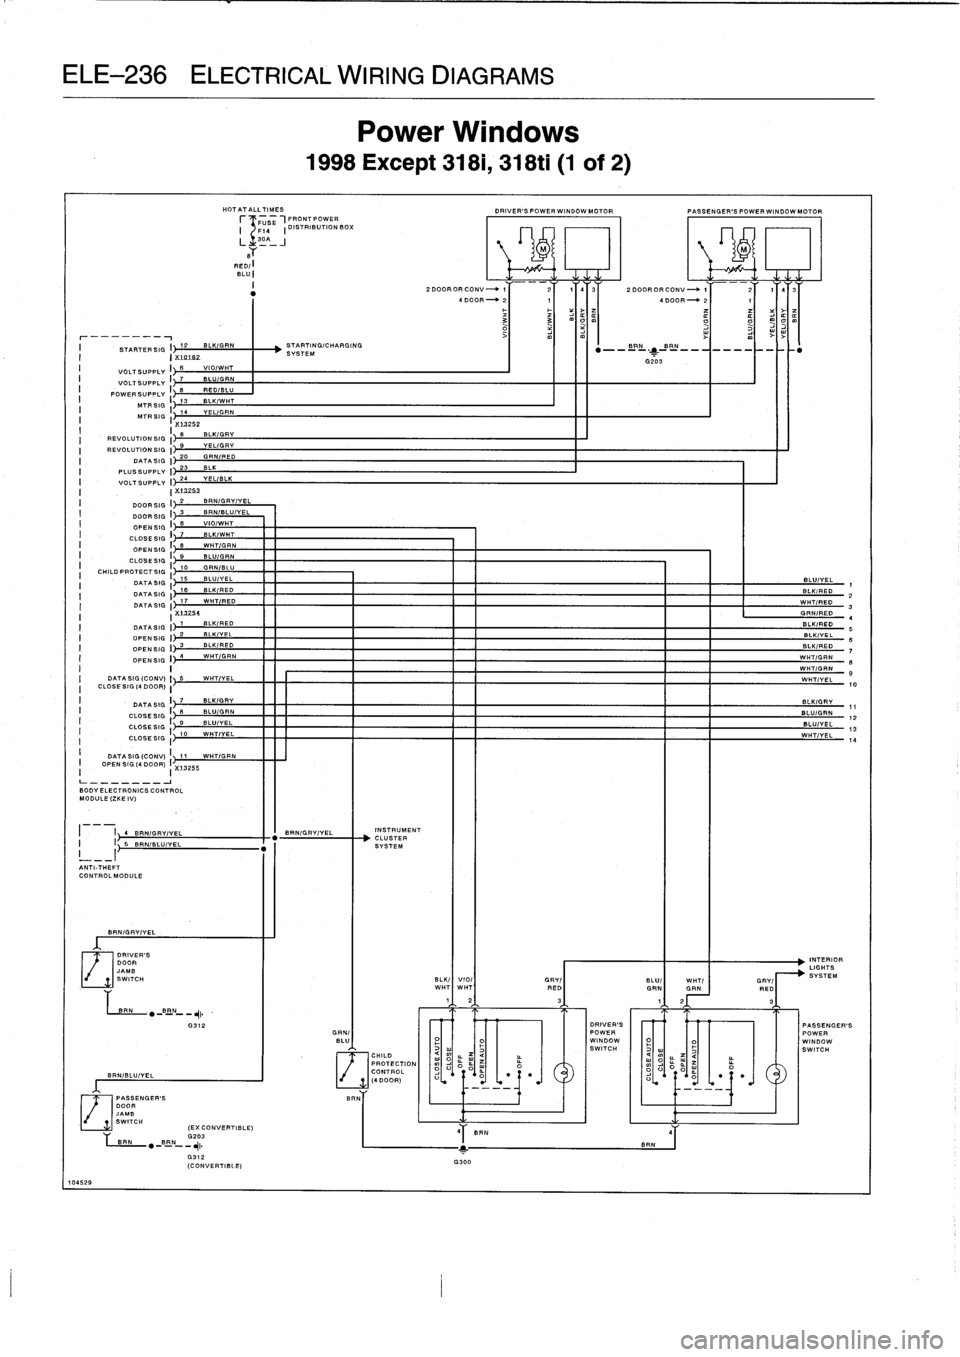 BMW 323i 1995 E36 Workshop Manual 
ELE-236
ELECTRICAL
WIRING
DIAGRAMS

HOTATALLTIMES
f
-
-T
USE
-1FRONTPOWER
F14

	

I
DISTRIBUTION
BOX

RED/
:
BLU
:

I

	

STARTERSIG
I
12

	

BLKIGRN

	

STARTING/CHARGING
I

	

I
X
10182

	

SYSTEM
